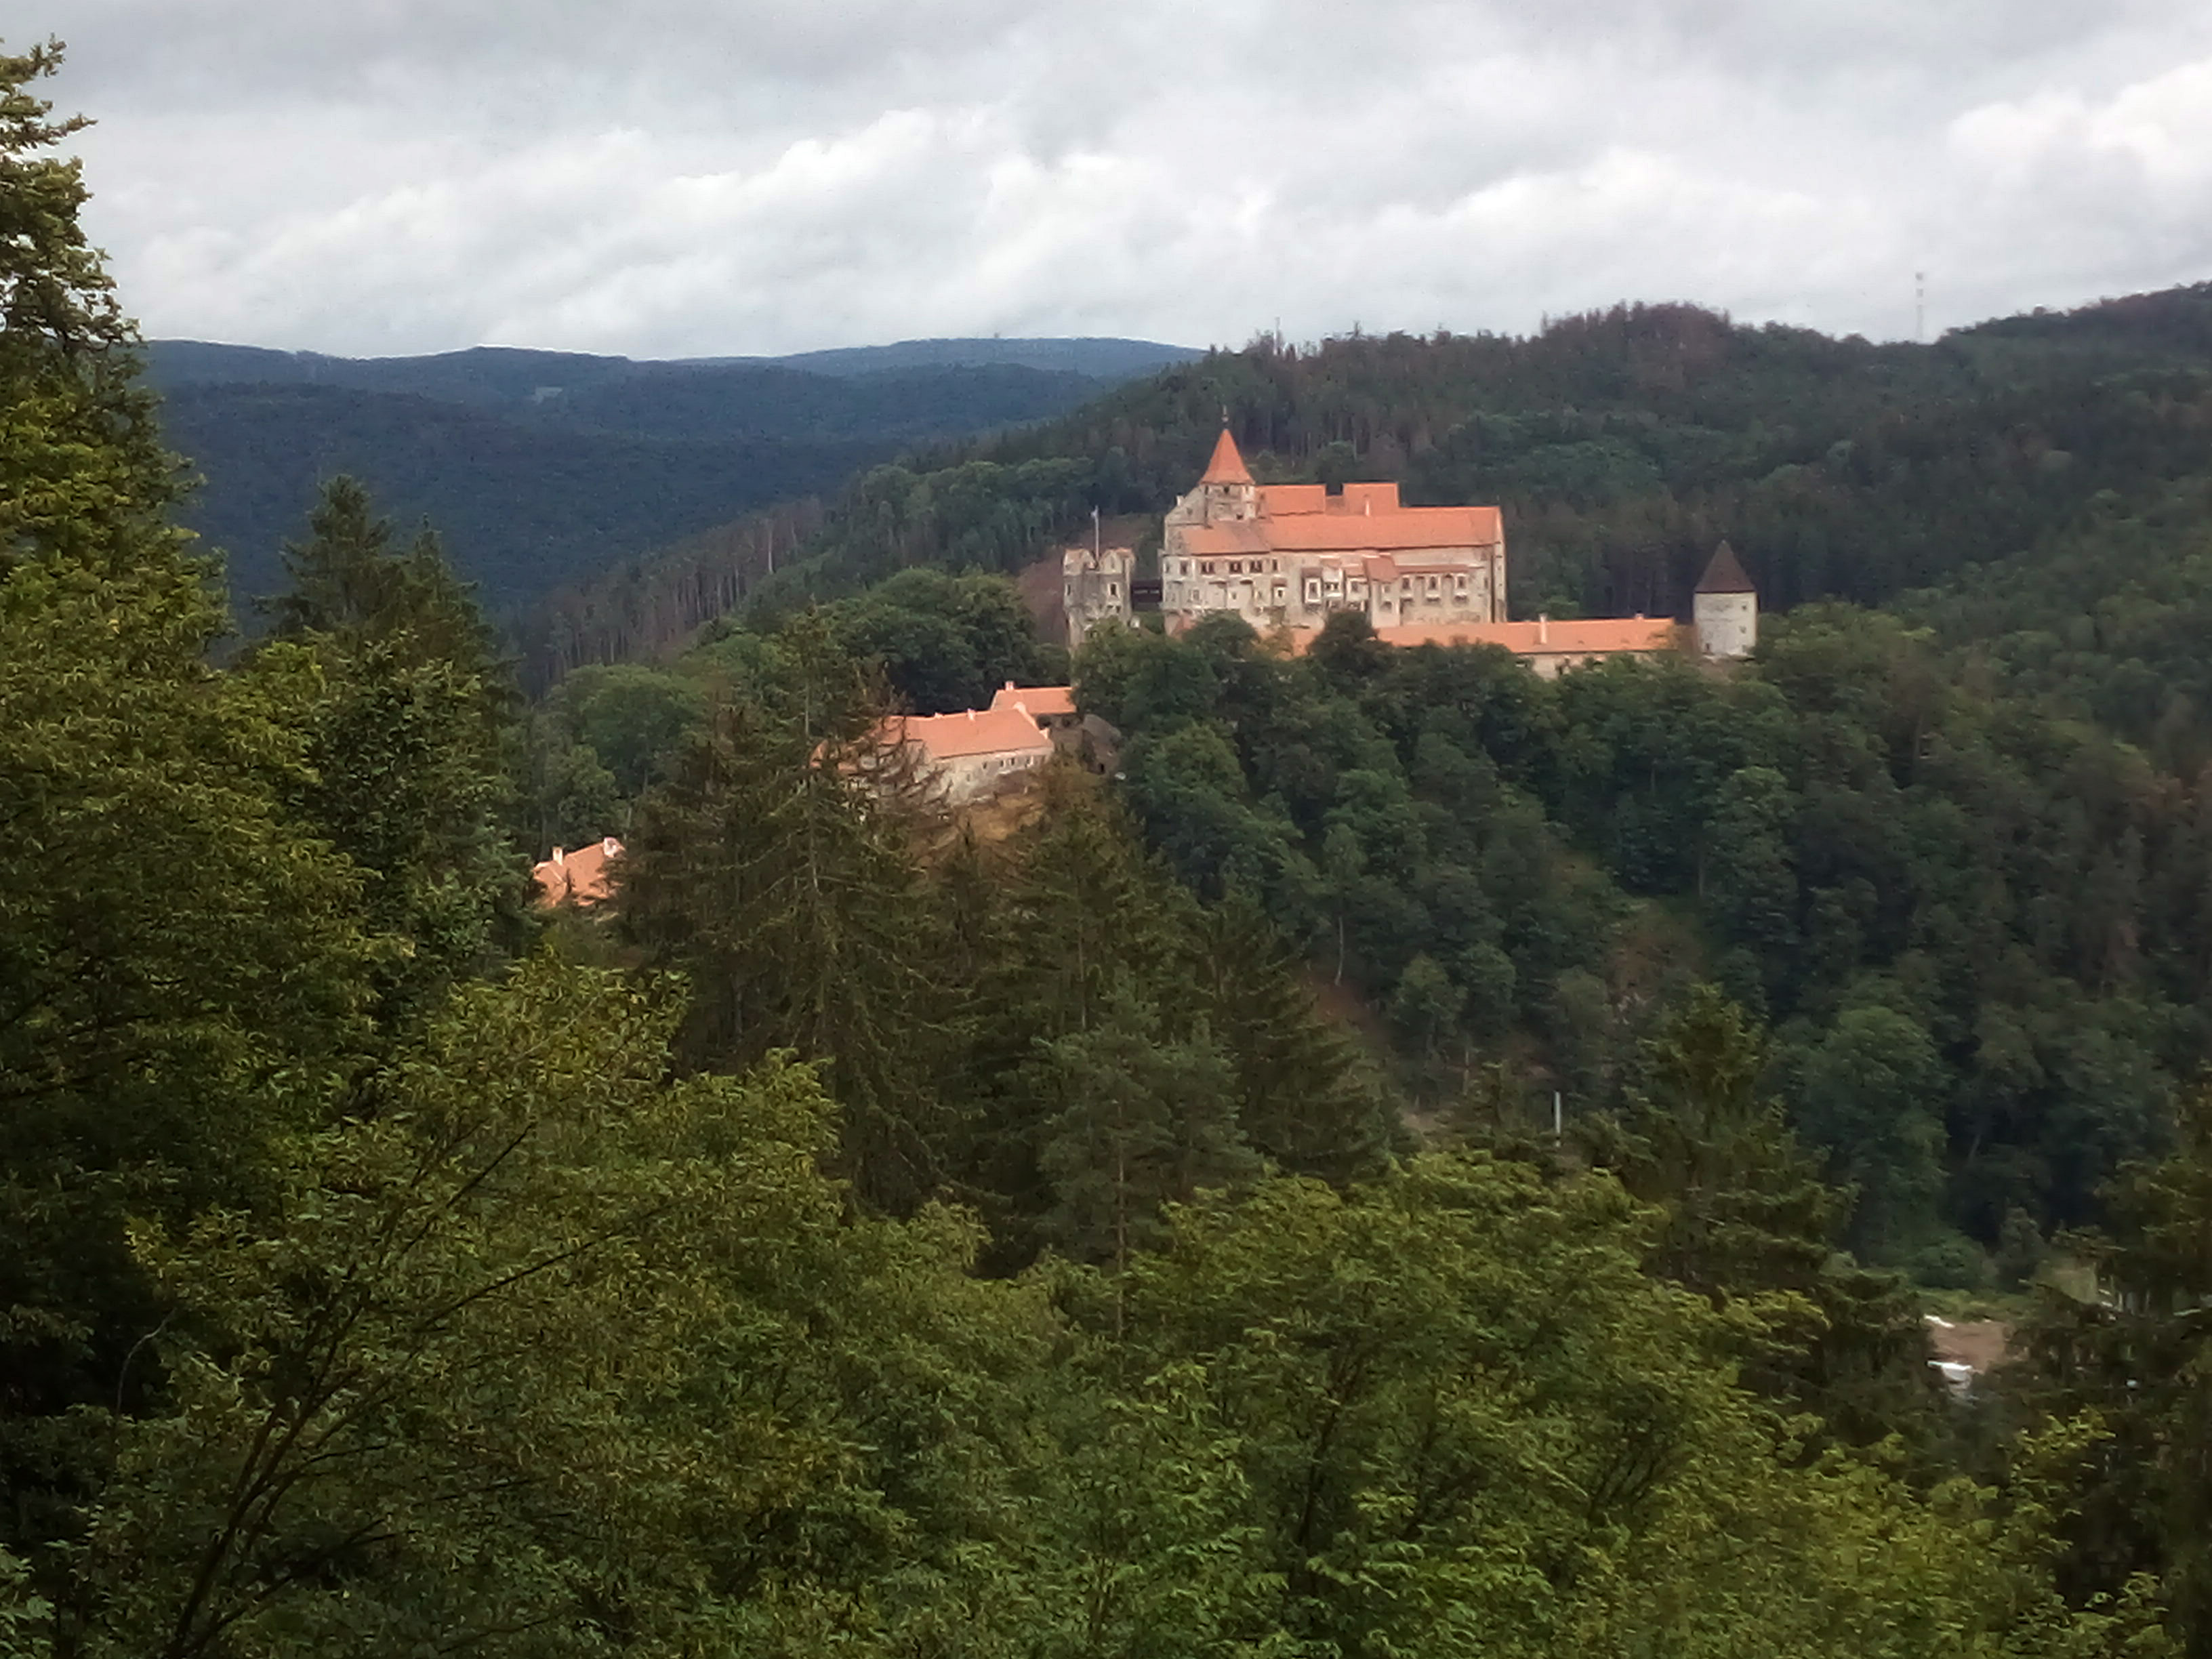 Pernštejn Castle, surrounded by forest